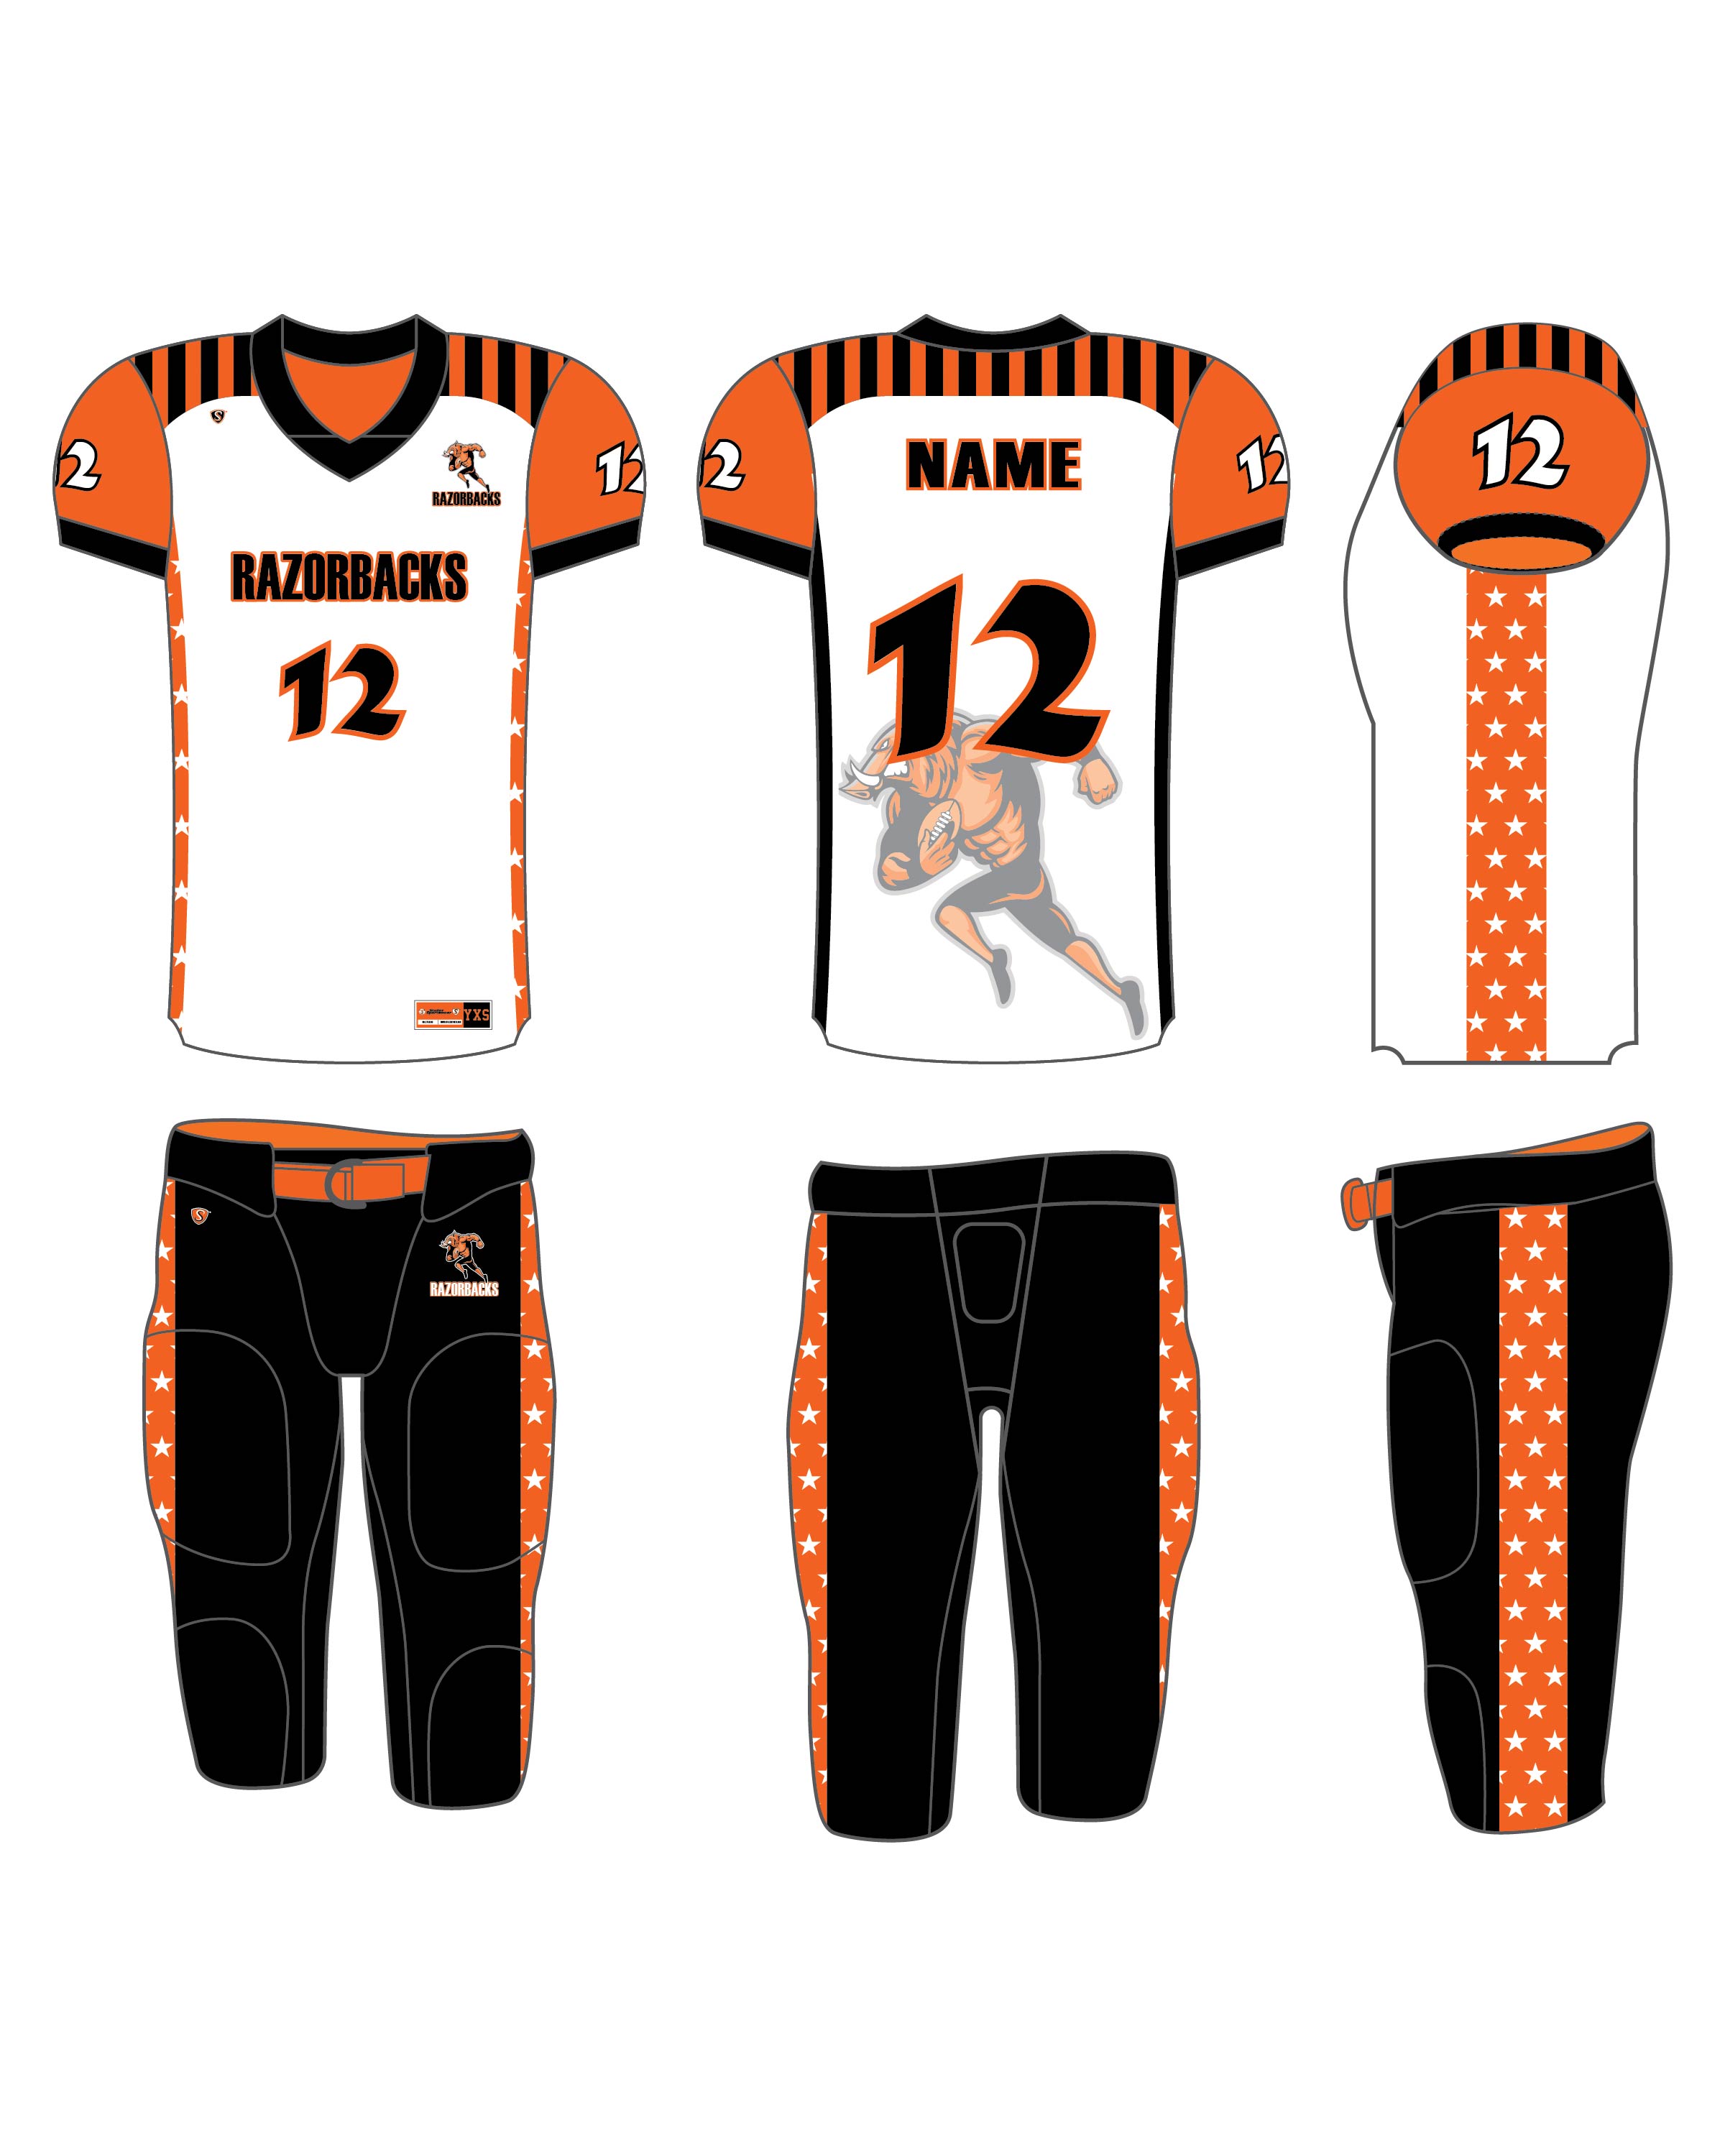 Custom Sublimated Football Uniform - Razorbacks